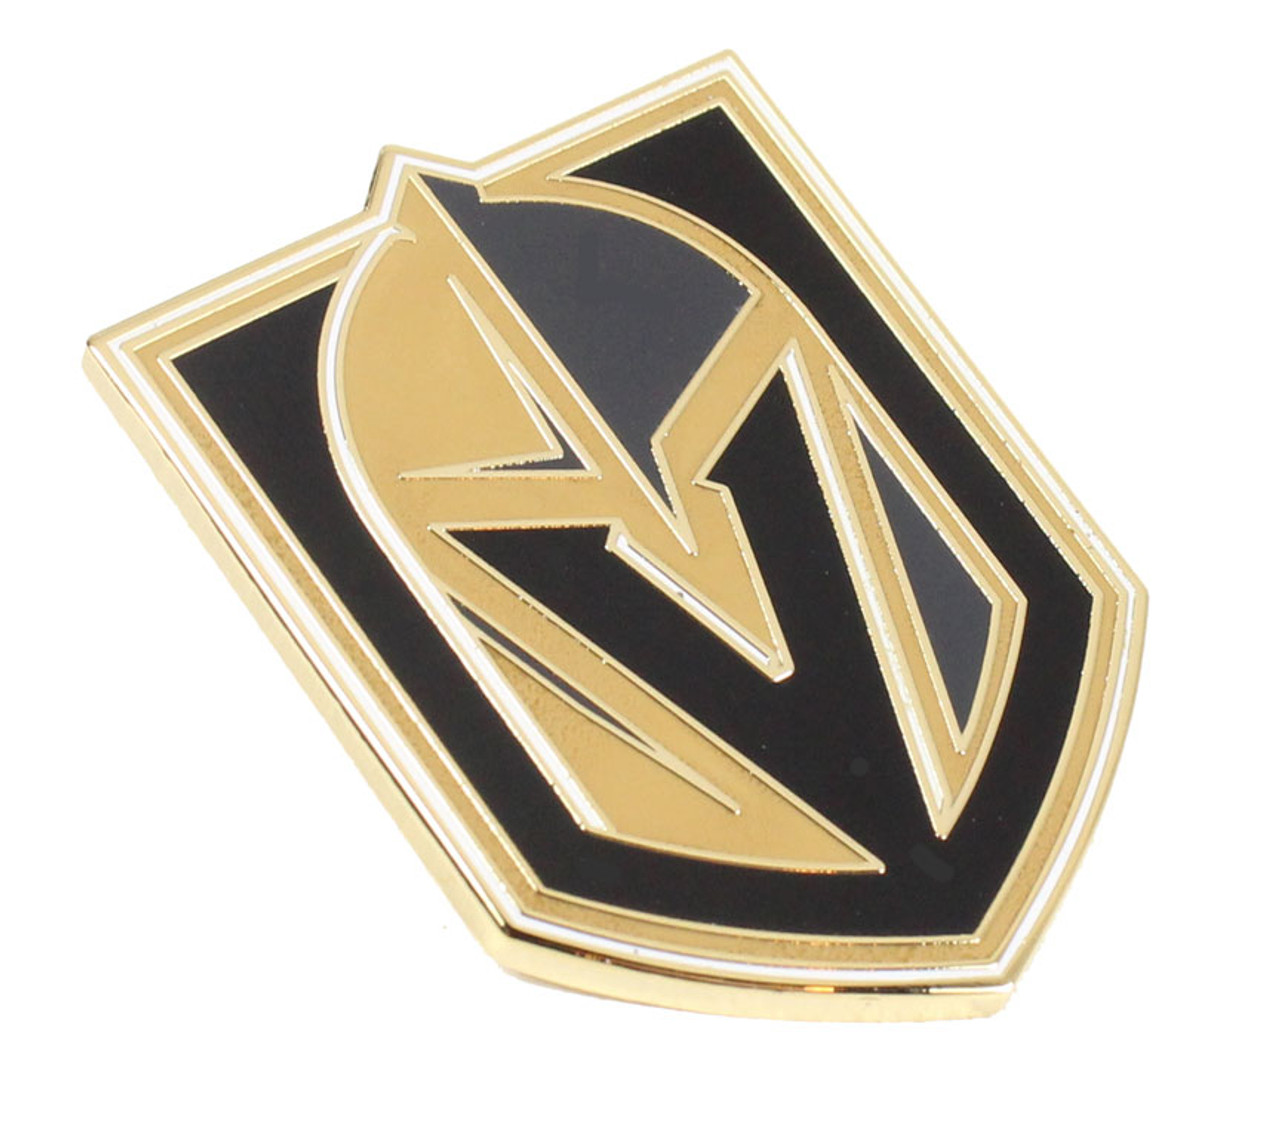 Buy Vegas Golden Knights NHL Car Flag